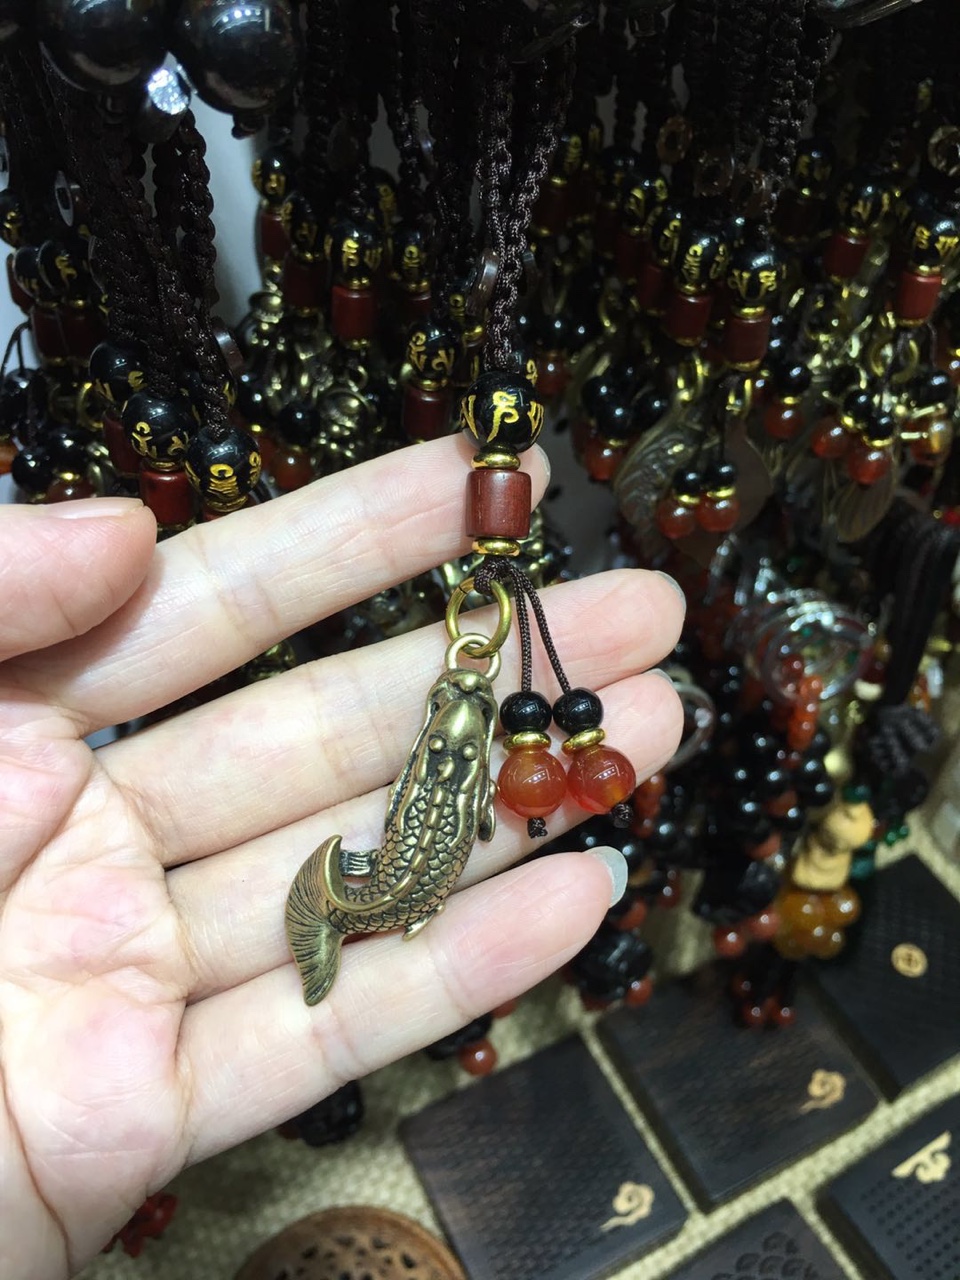 ⚜️⚜️纯铜钥匙扣 3
纯铜精制，做旧痕迹
可做钥匙扣、包挂件图